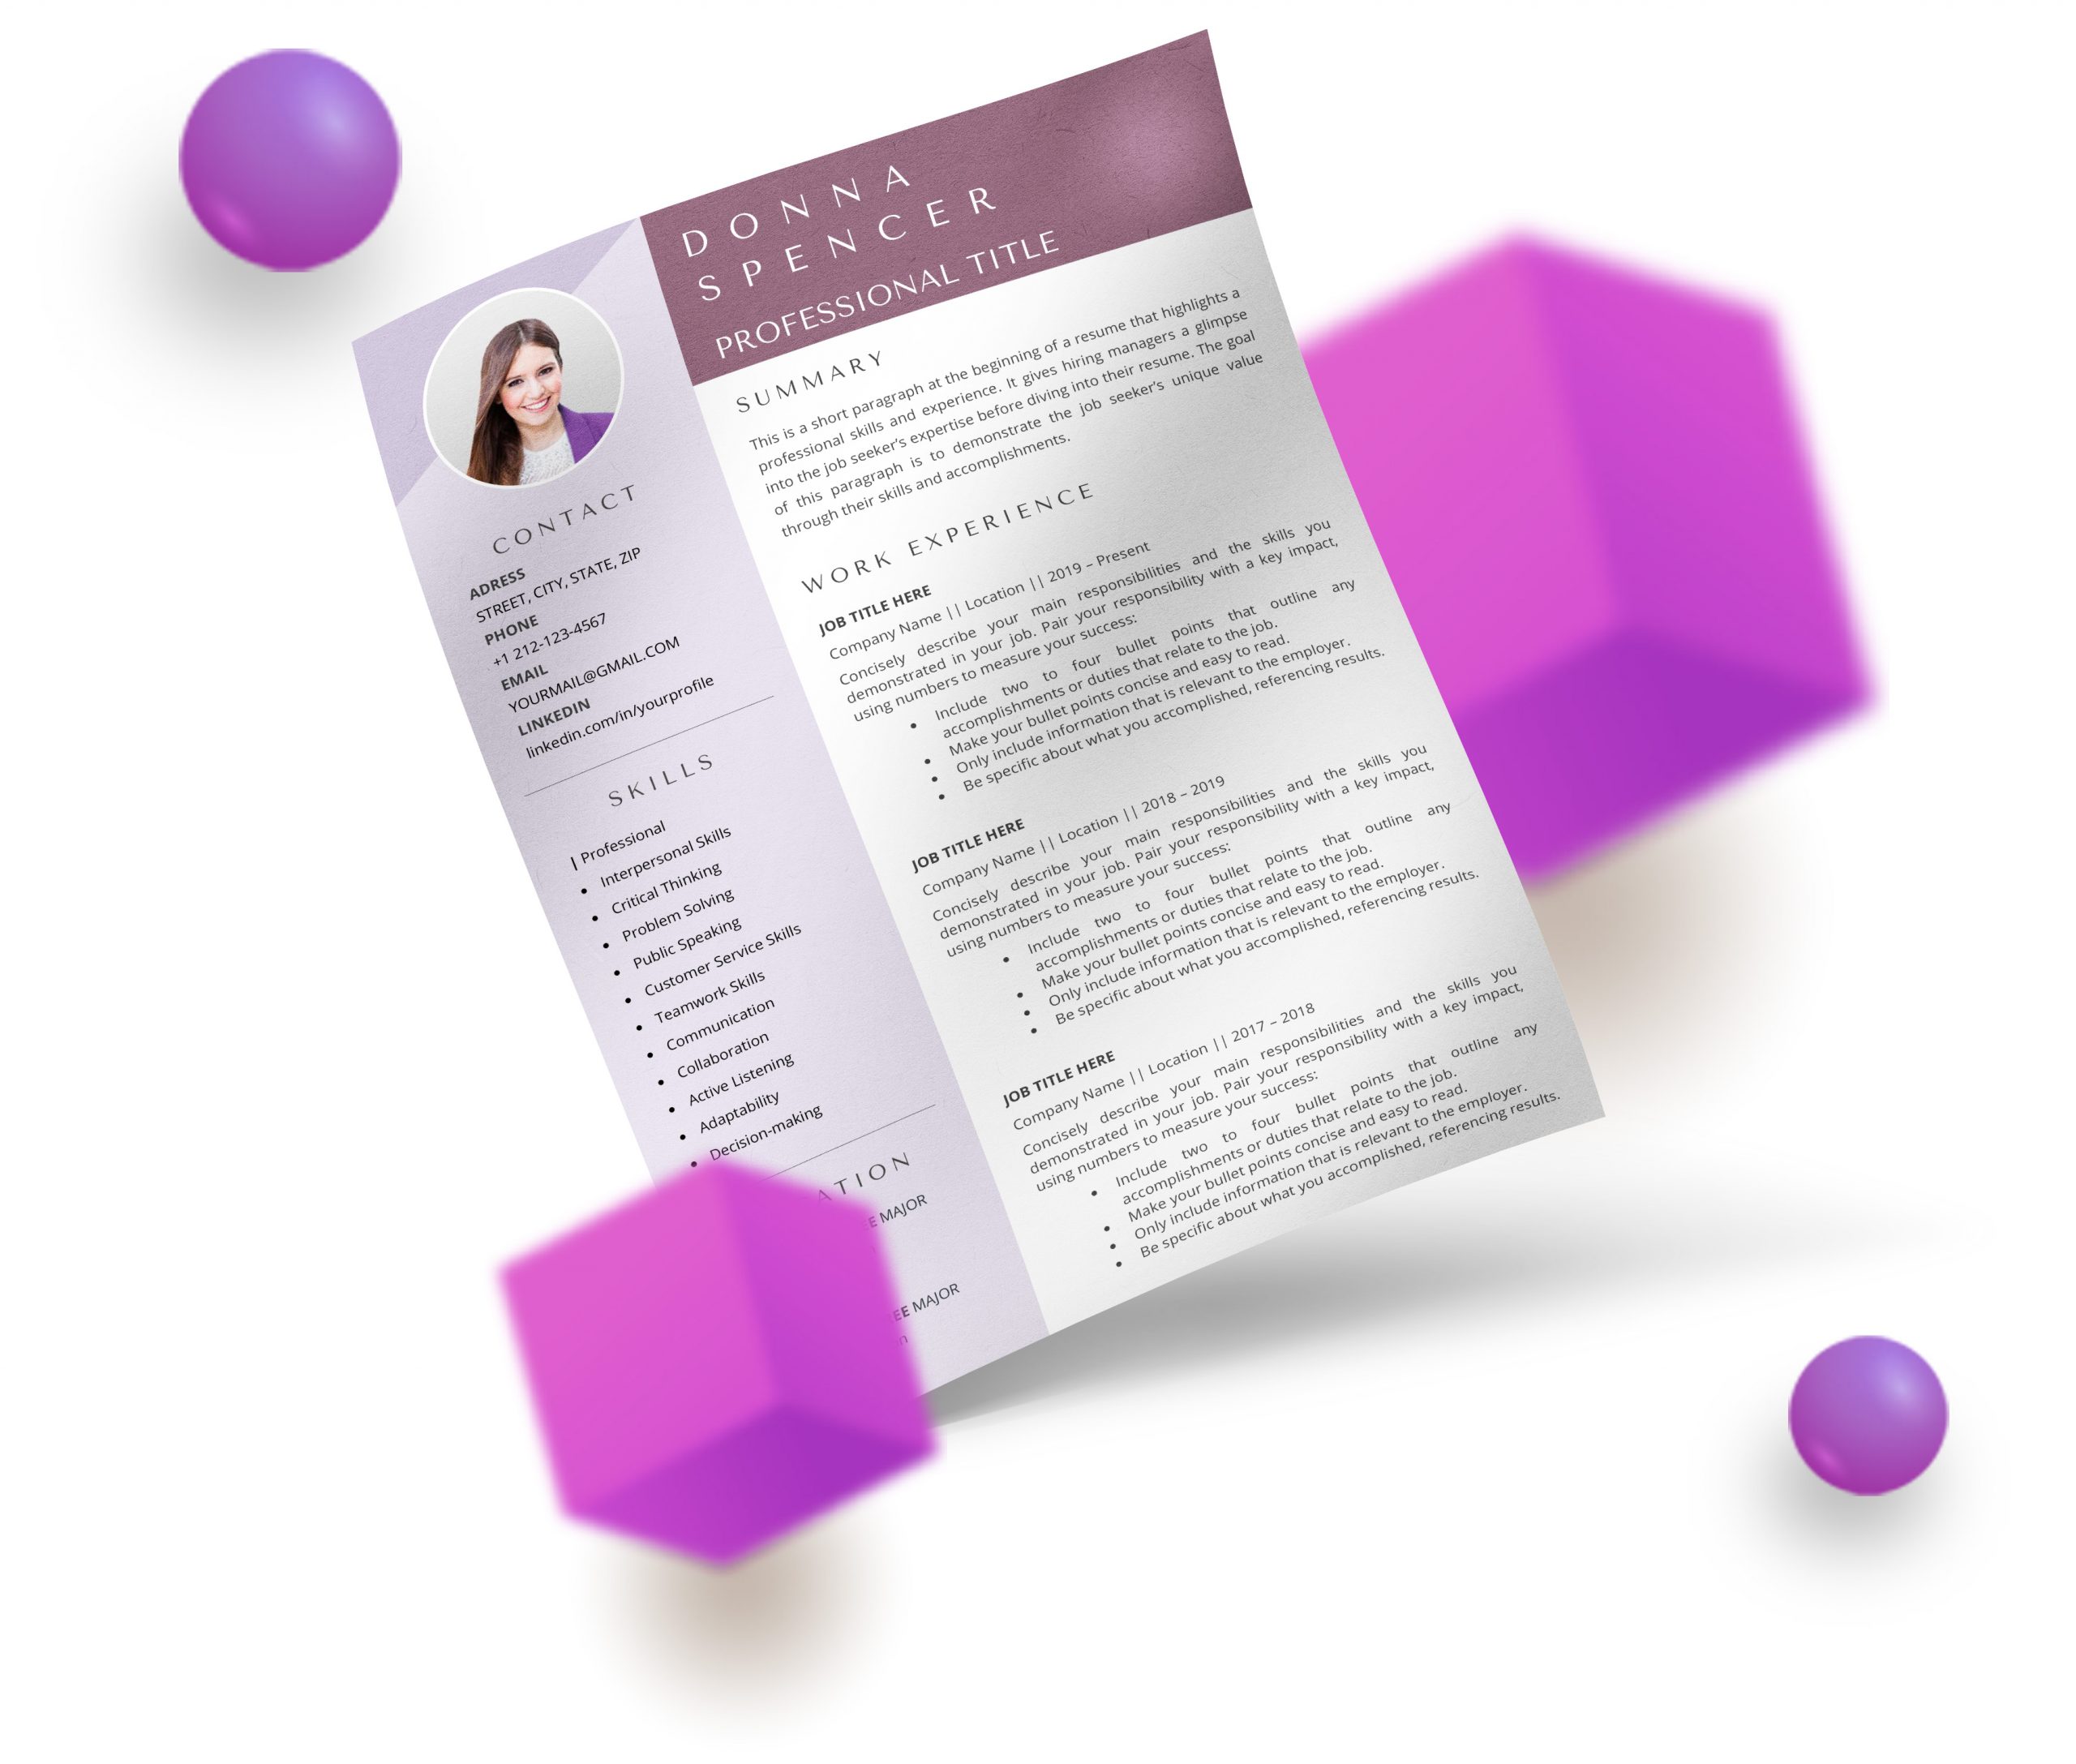 printable resume template